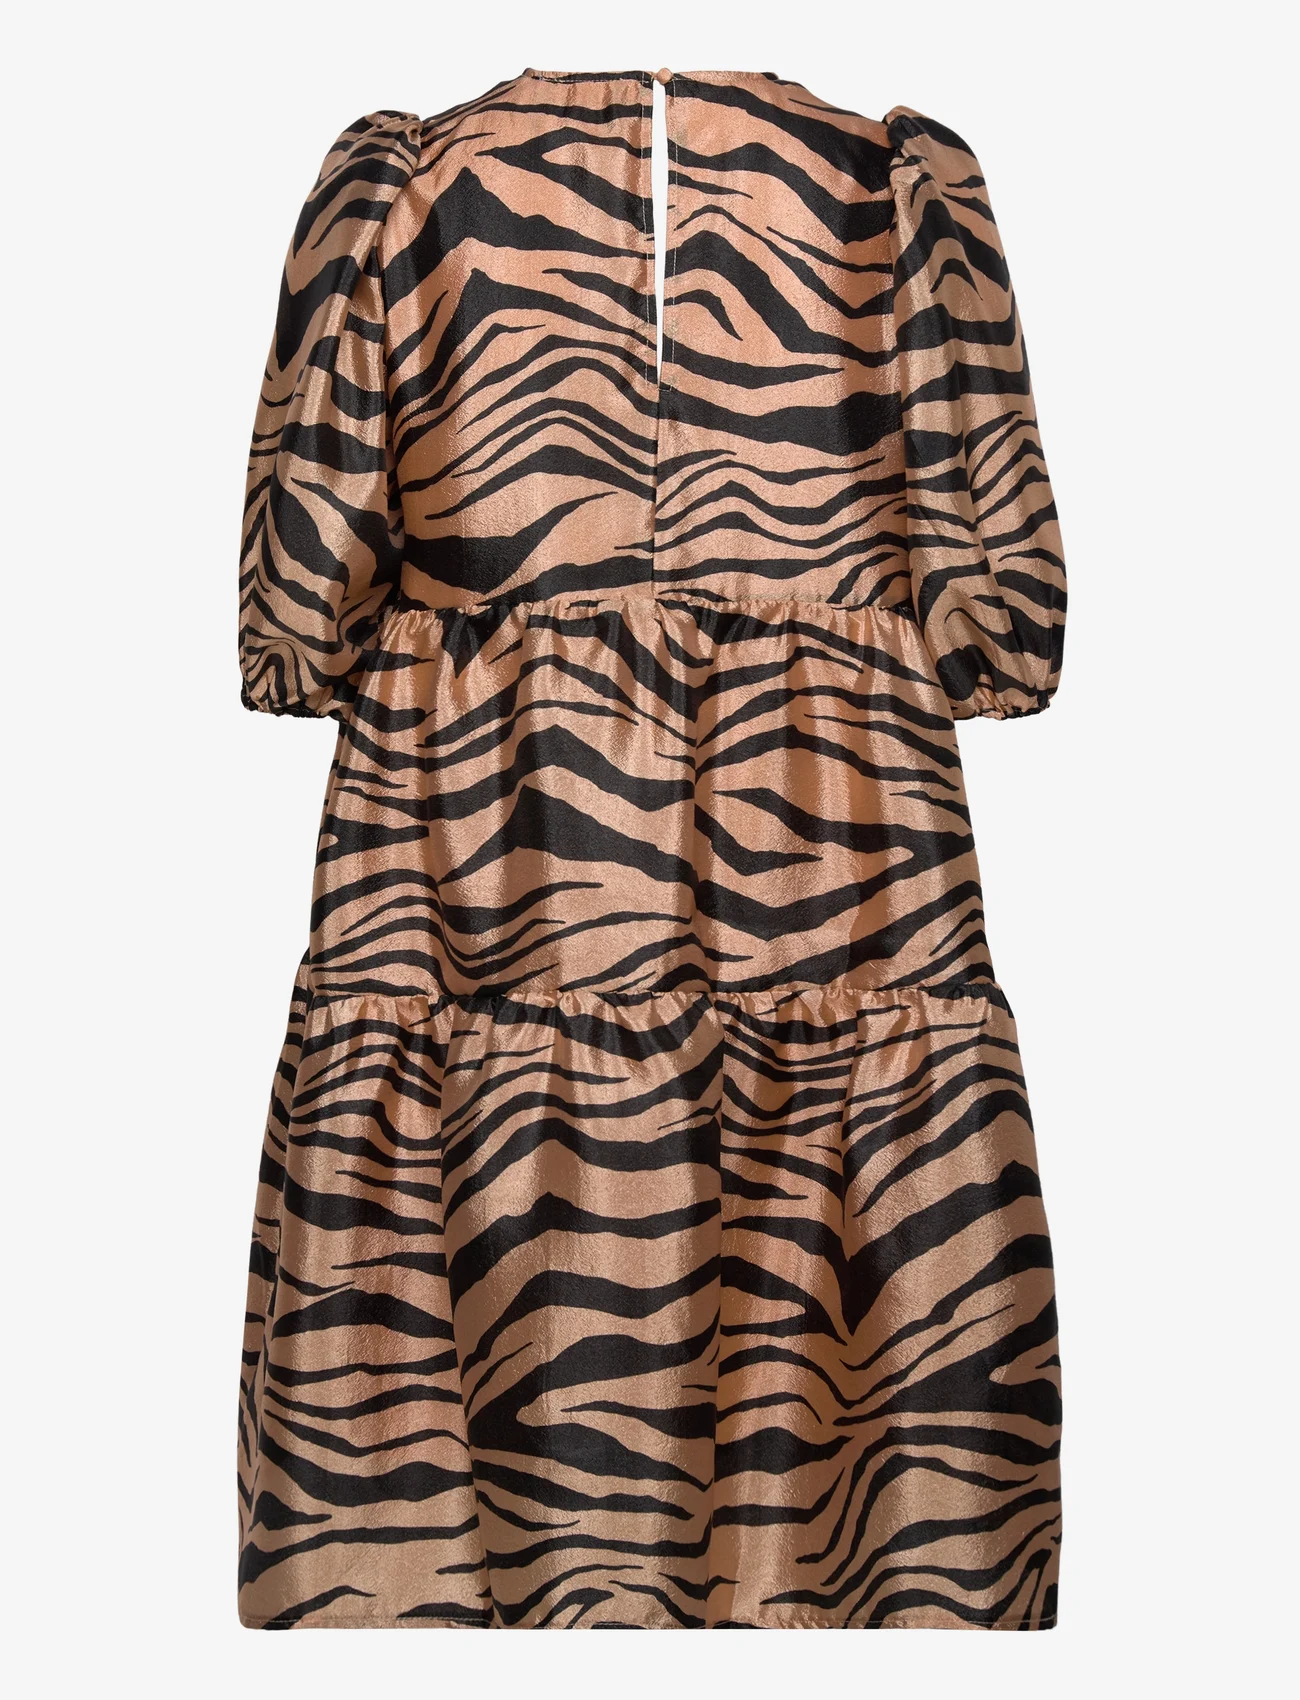 Cras - Leiacras Dress - krótkie sukienki - zebra almond - 1